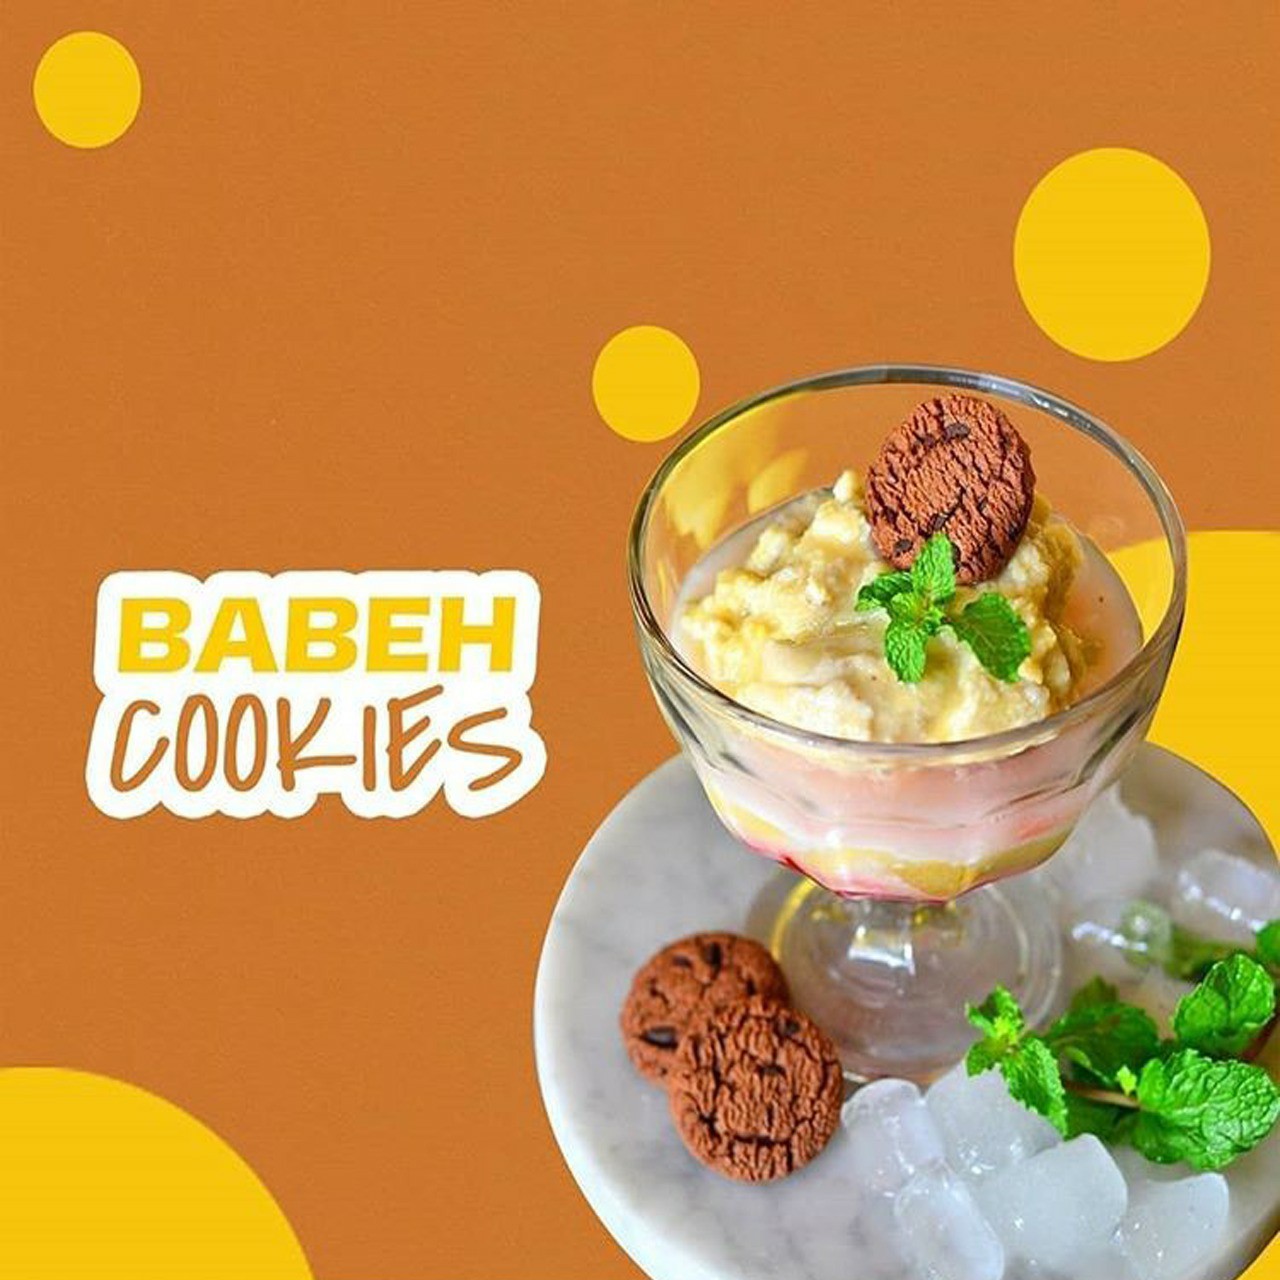 Babeh Cookies